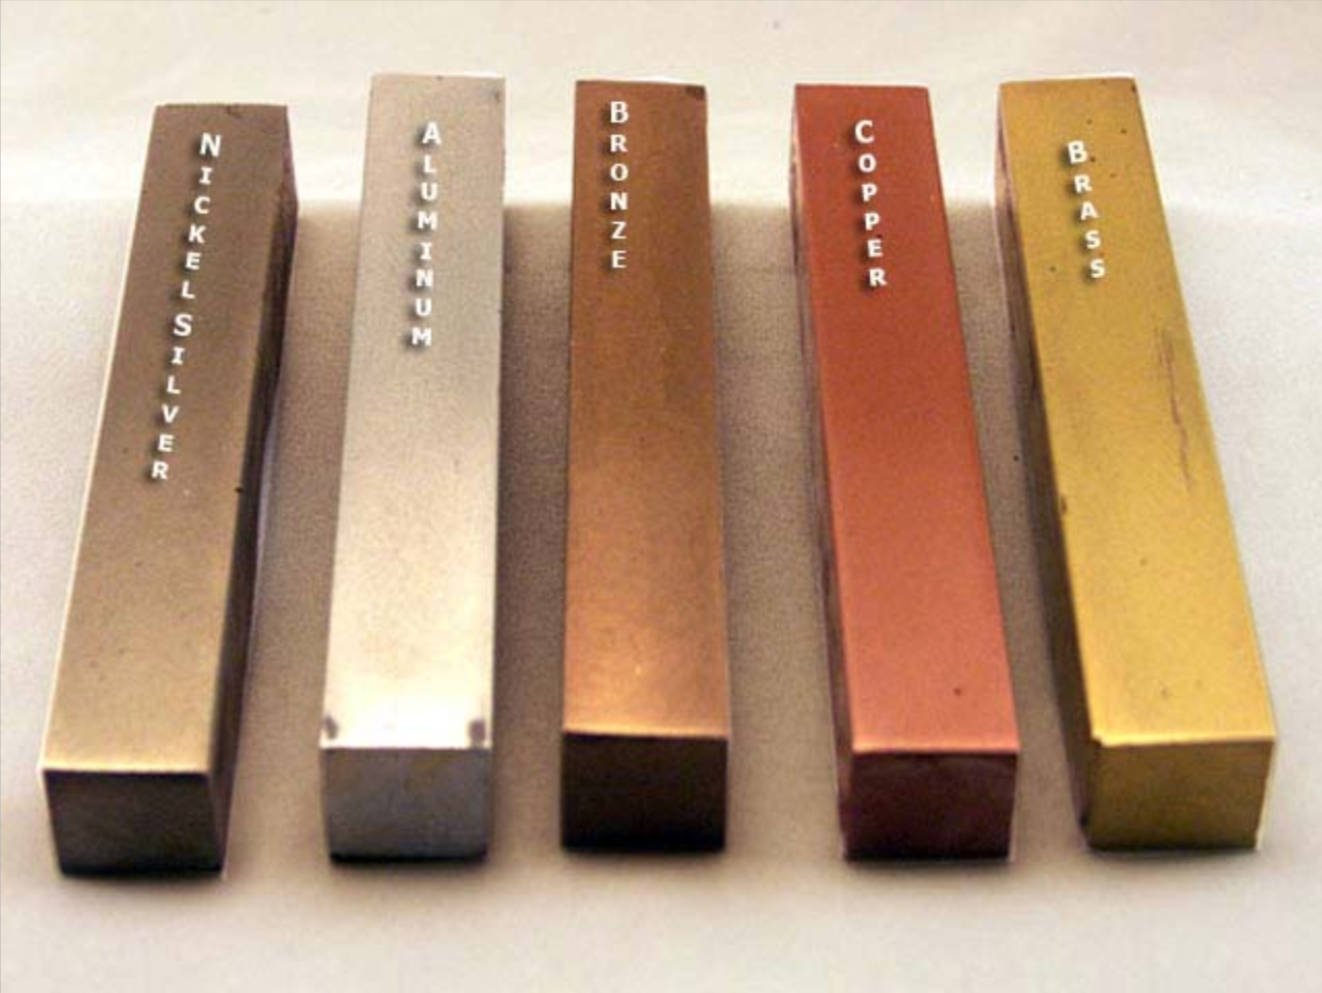 Nickel Silver, Aluminum, Copper, Bronze and Brass